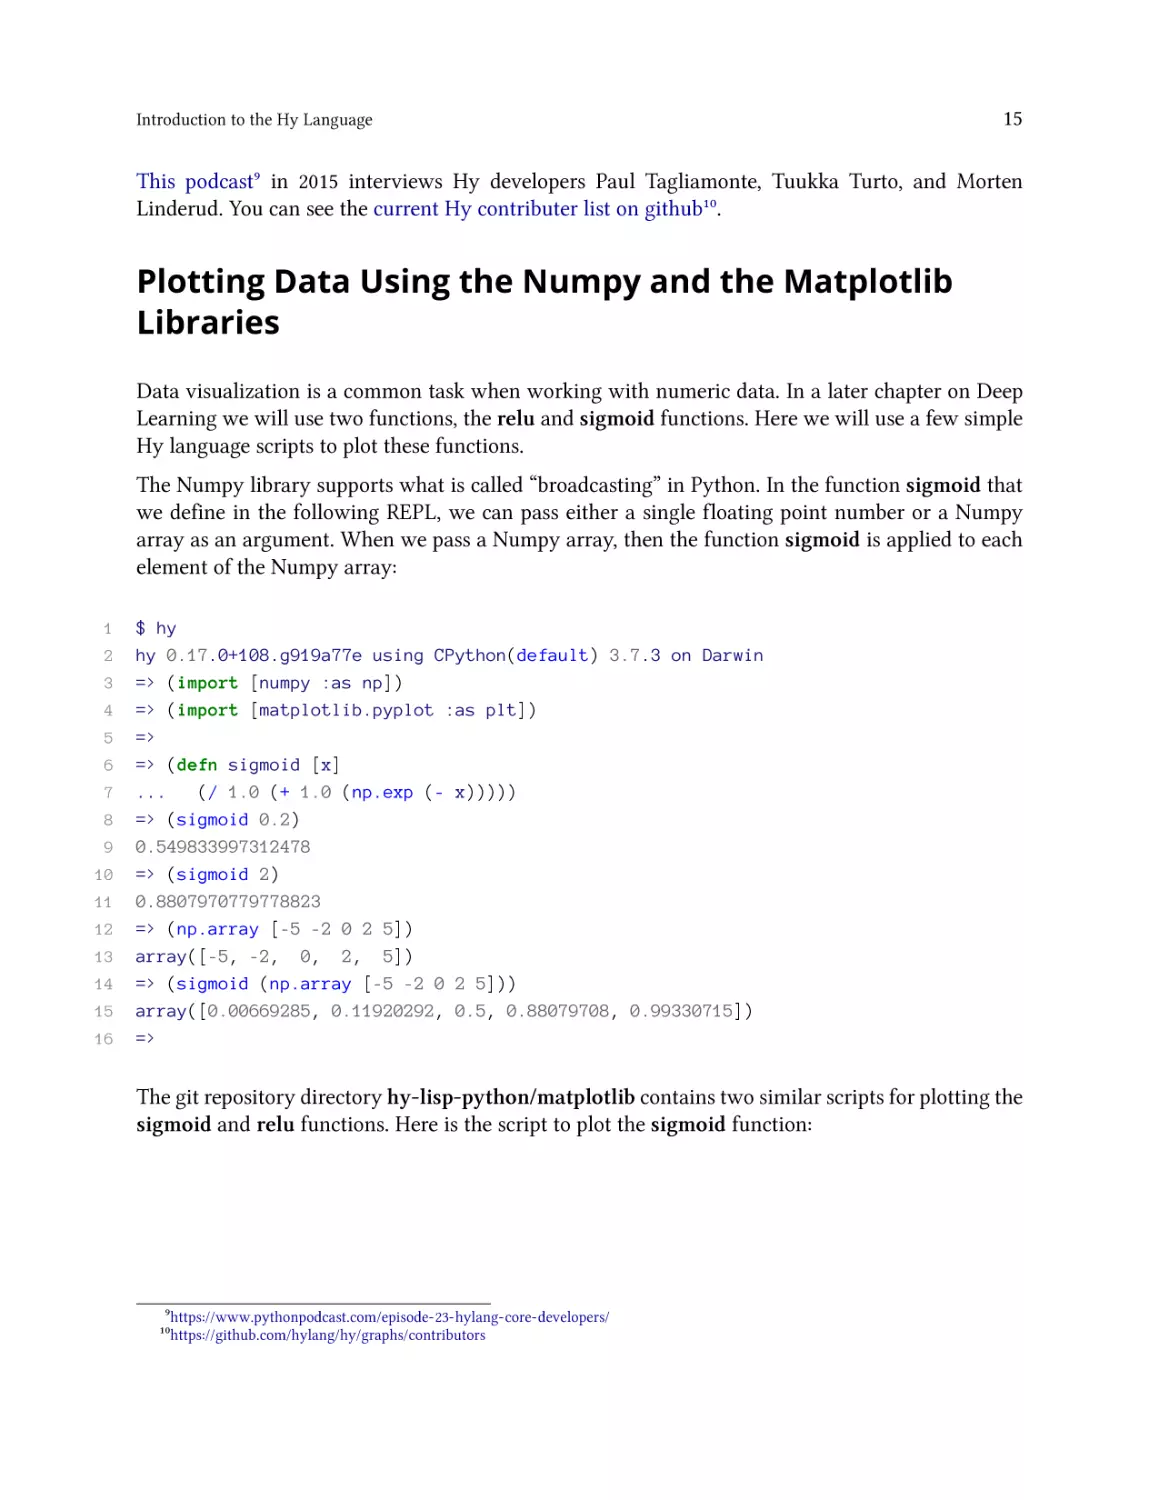 Plotting Data Using the Numpy and the Matplotlib Libraries